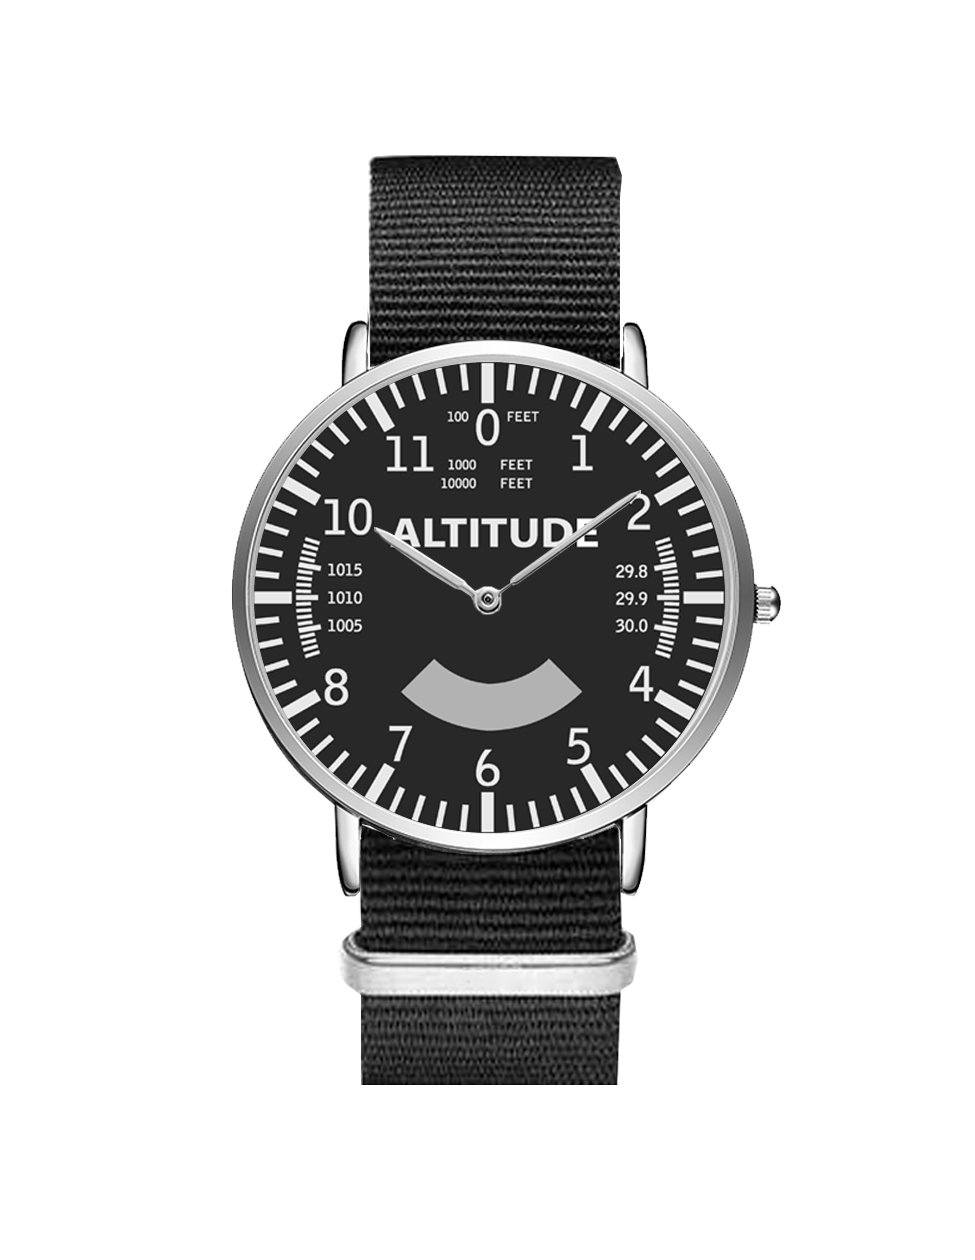 Airplane Instrument Series (Altitude) Leather Strap Watches Pilot Eyes Store Silver & Black Nylon Strap 